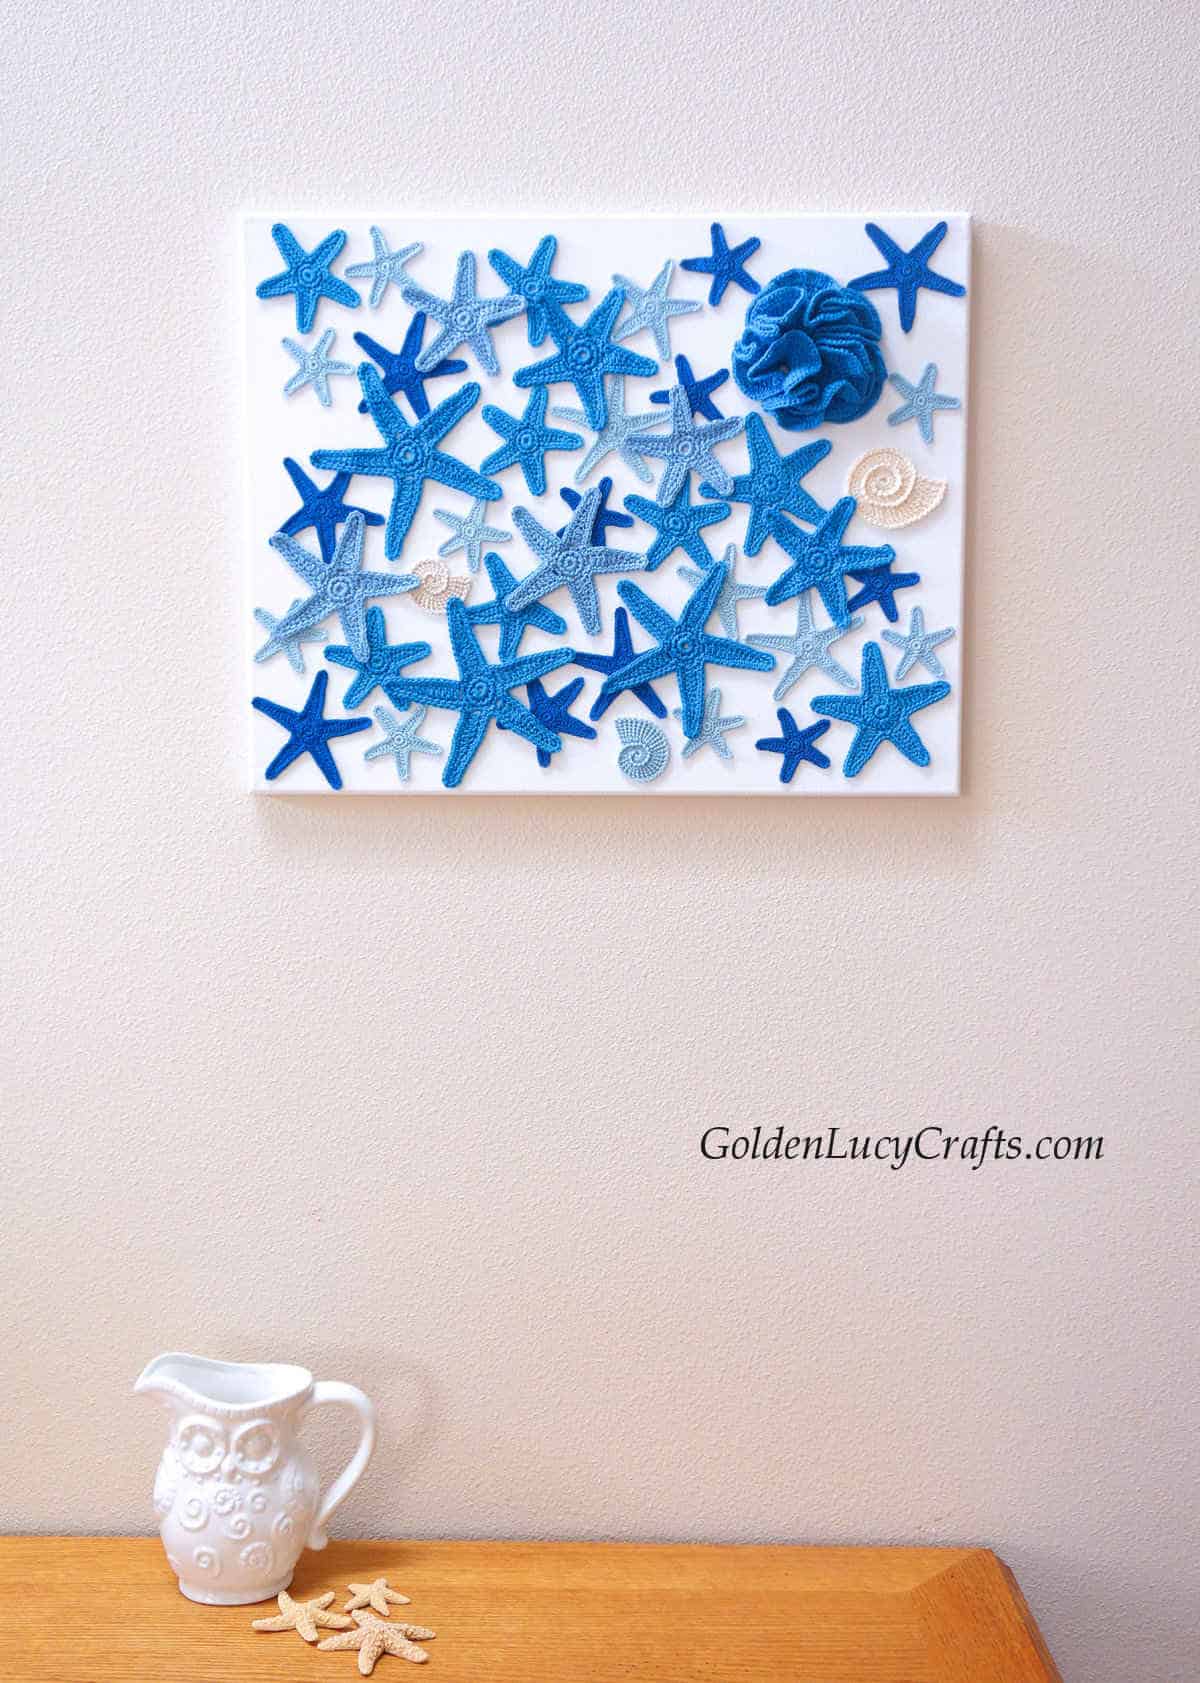 Crochet wall art, blue star fish and corals.